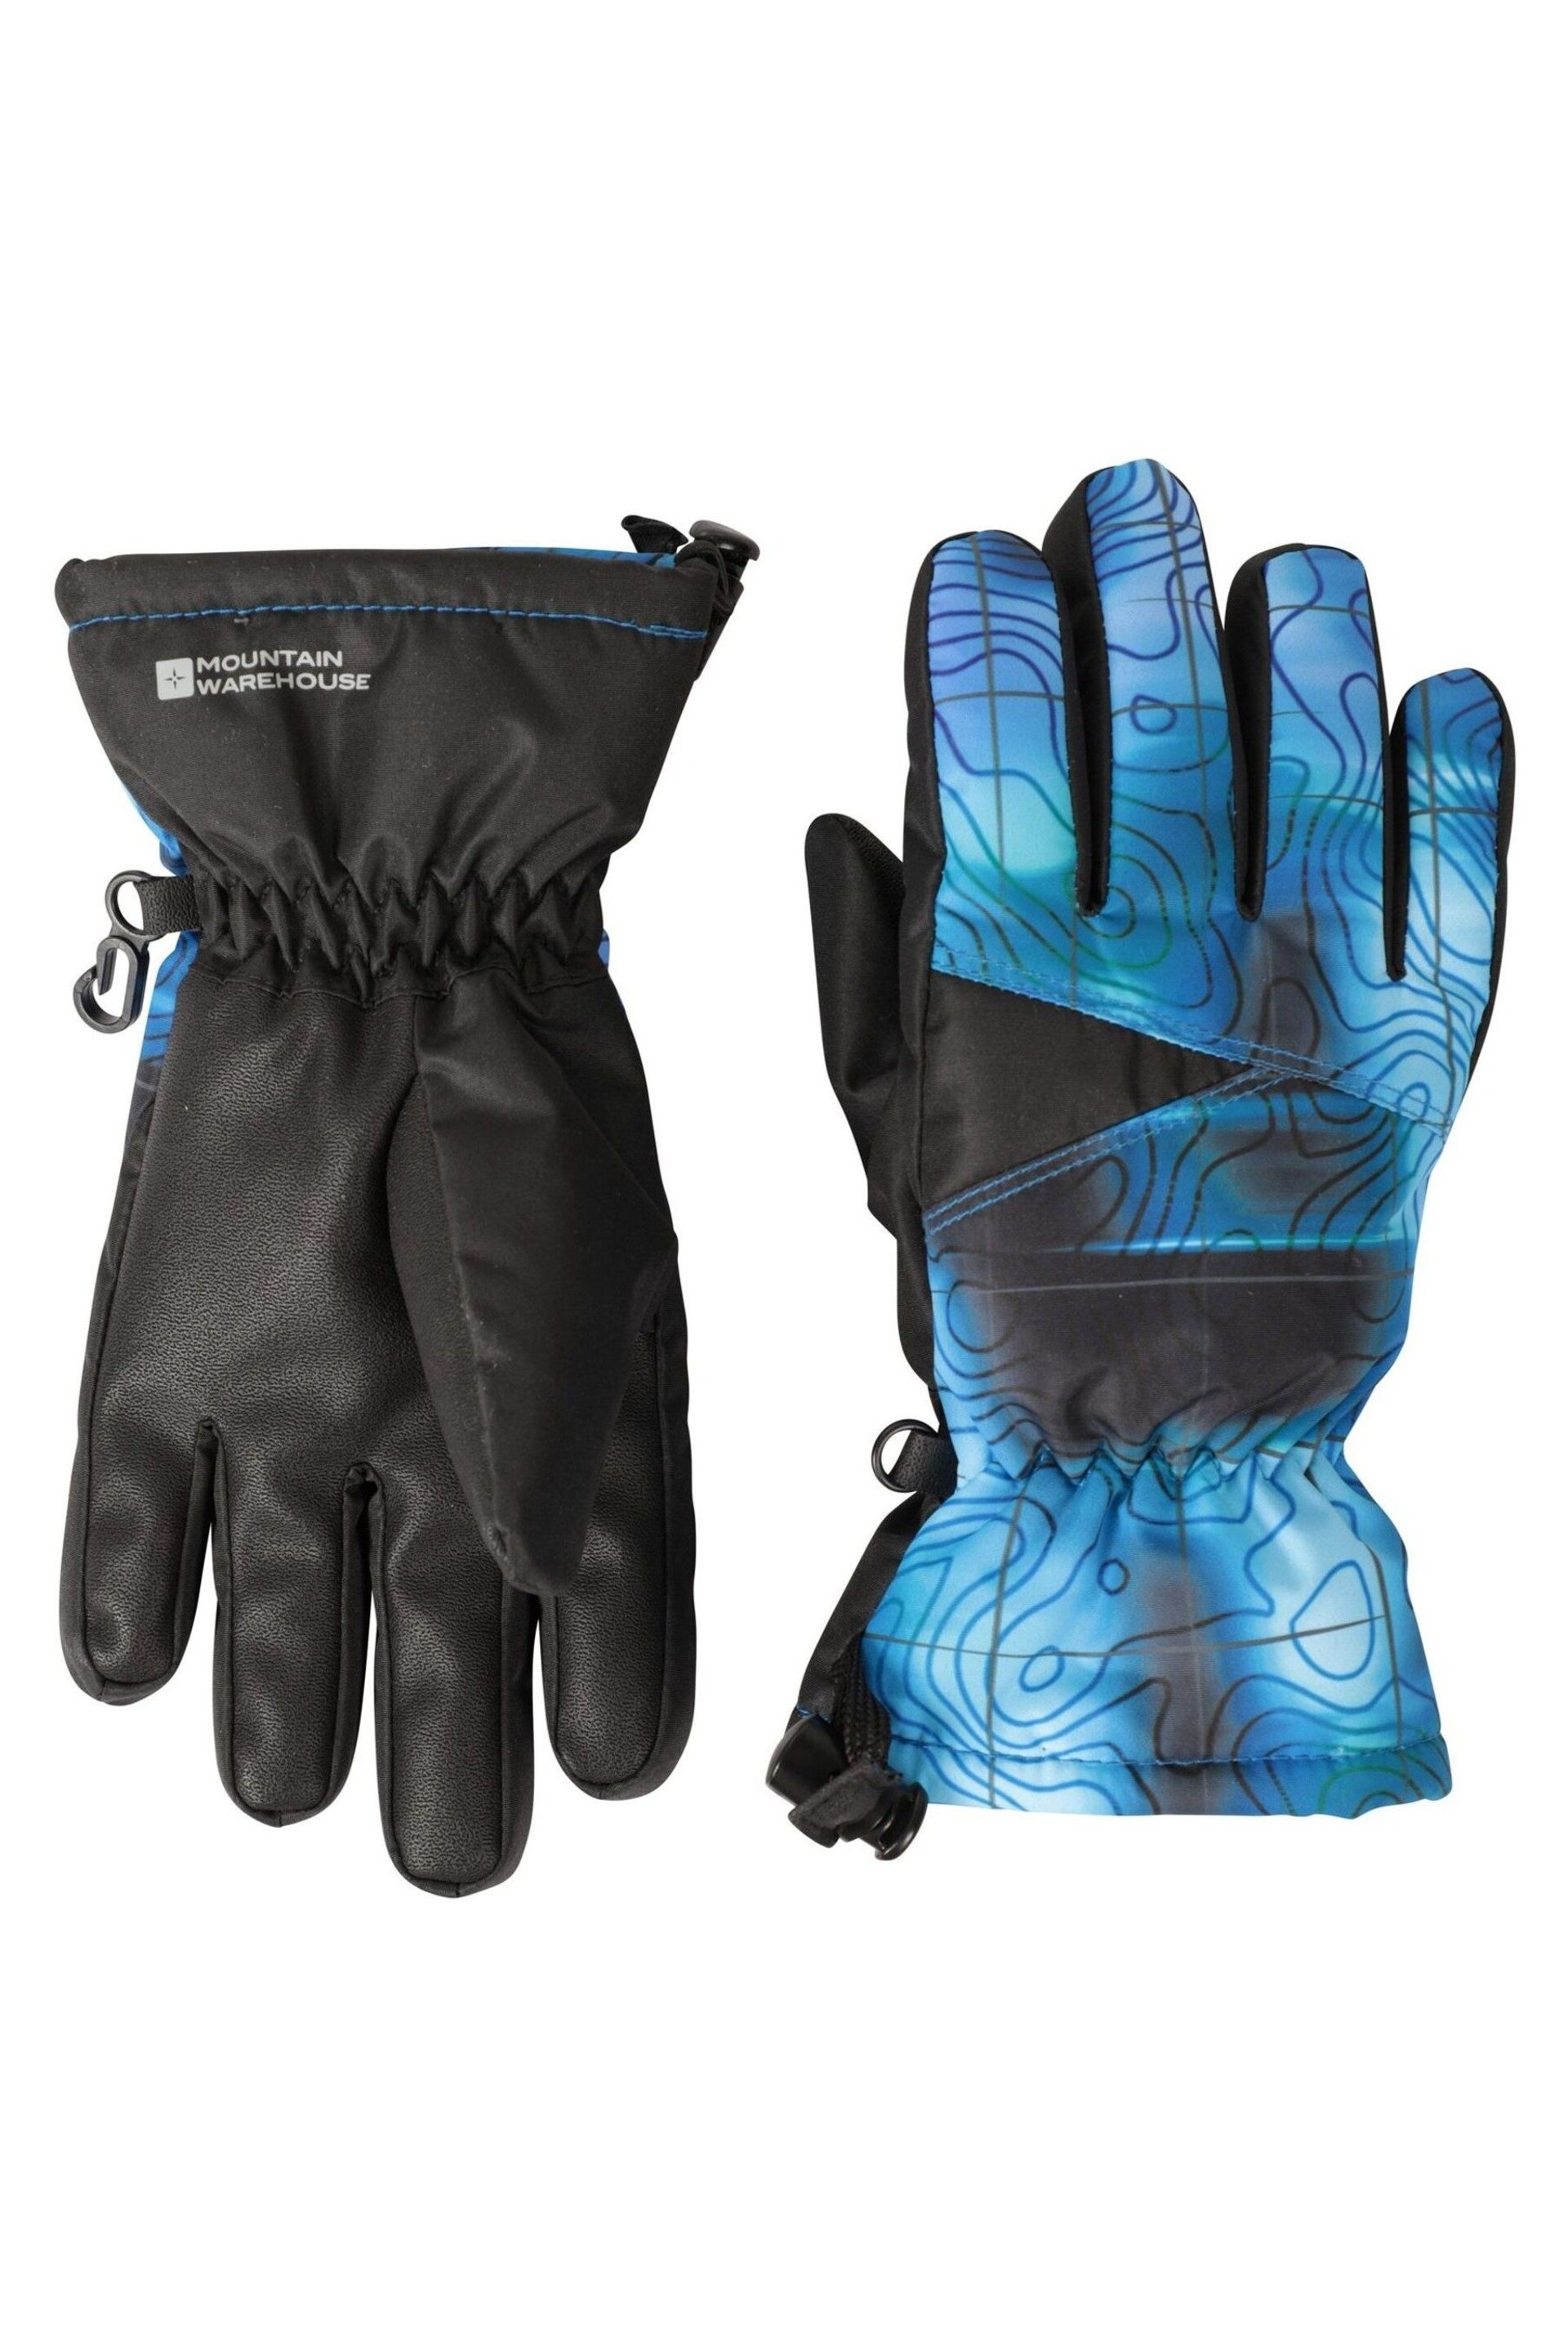 Mountain Warehouse Blue Kids Extreme Waterproof Printed Ski Gloves - Image 1 of 6